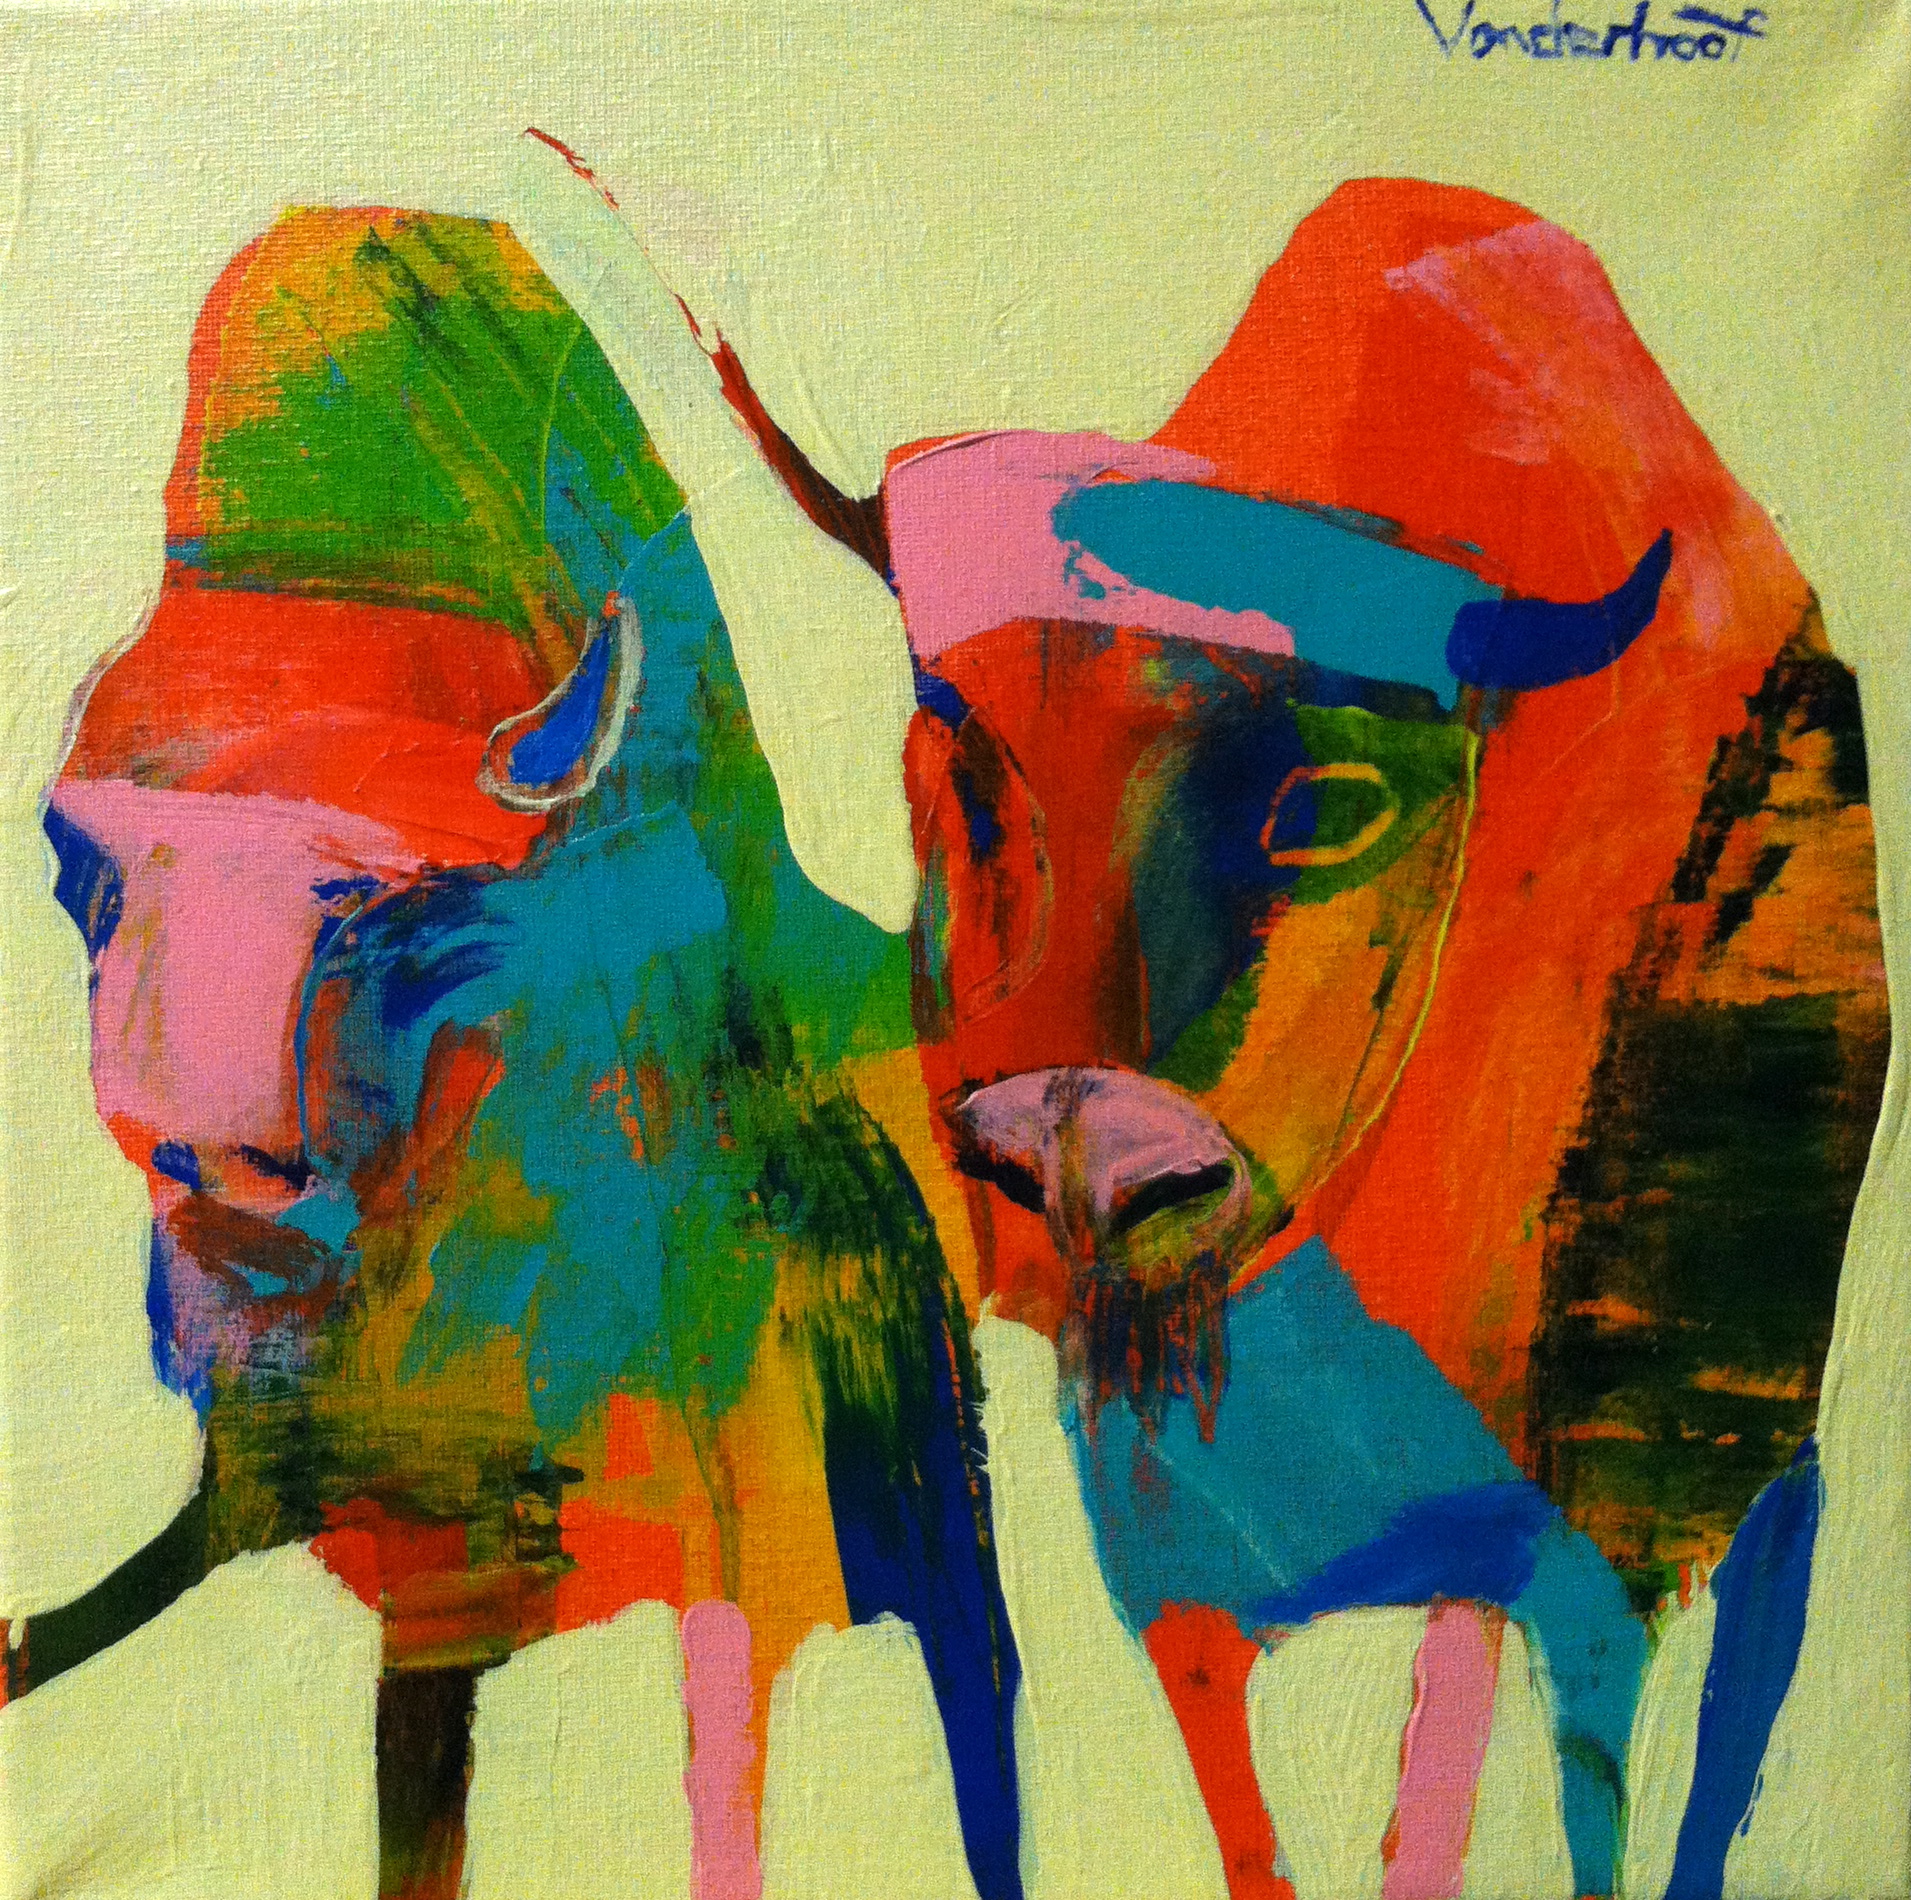  Buffalo, acrylic on canvas, 12x12 inches, 2015 